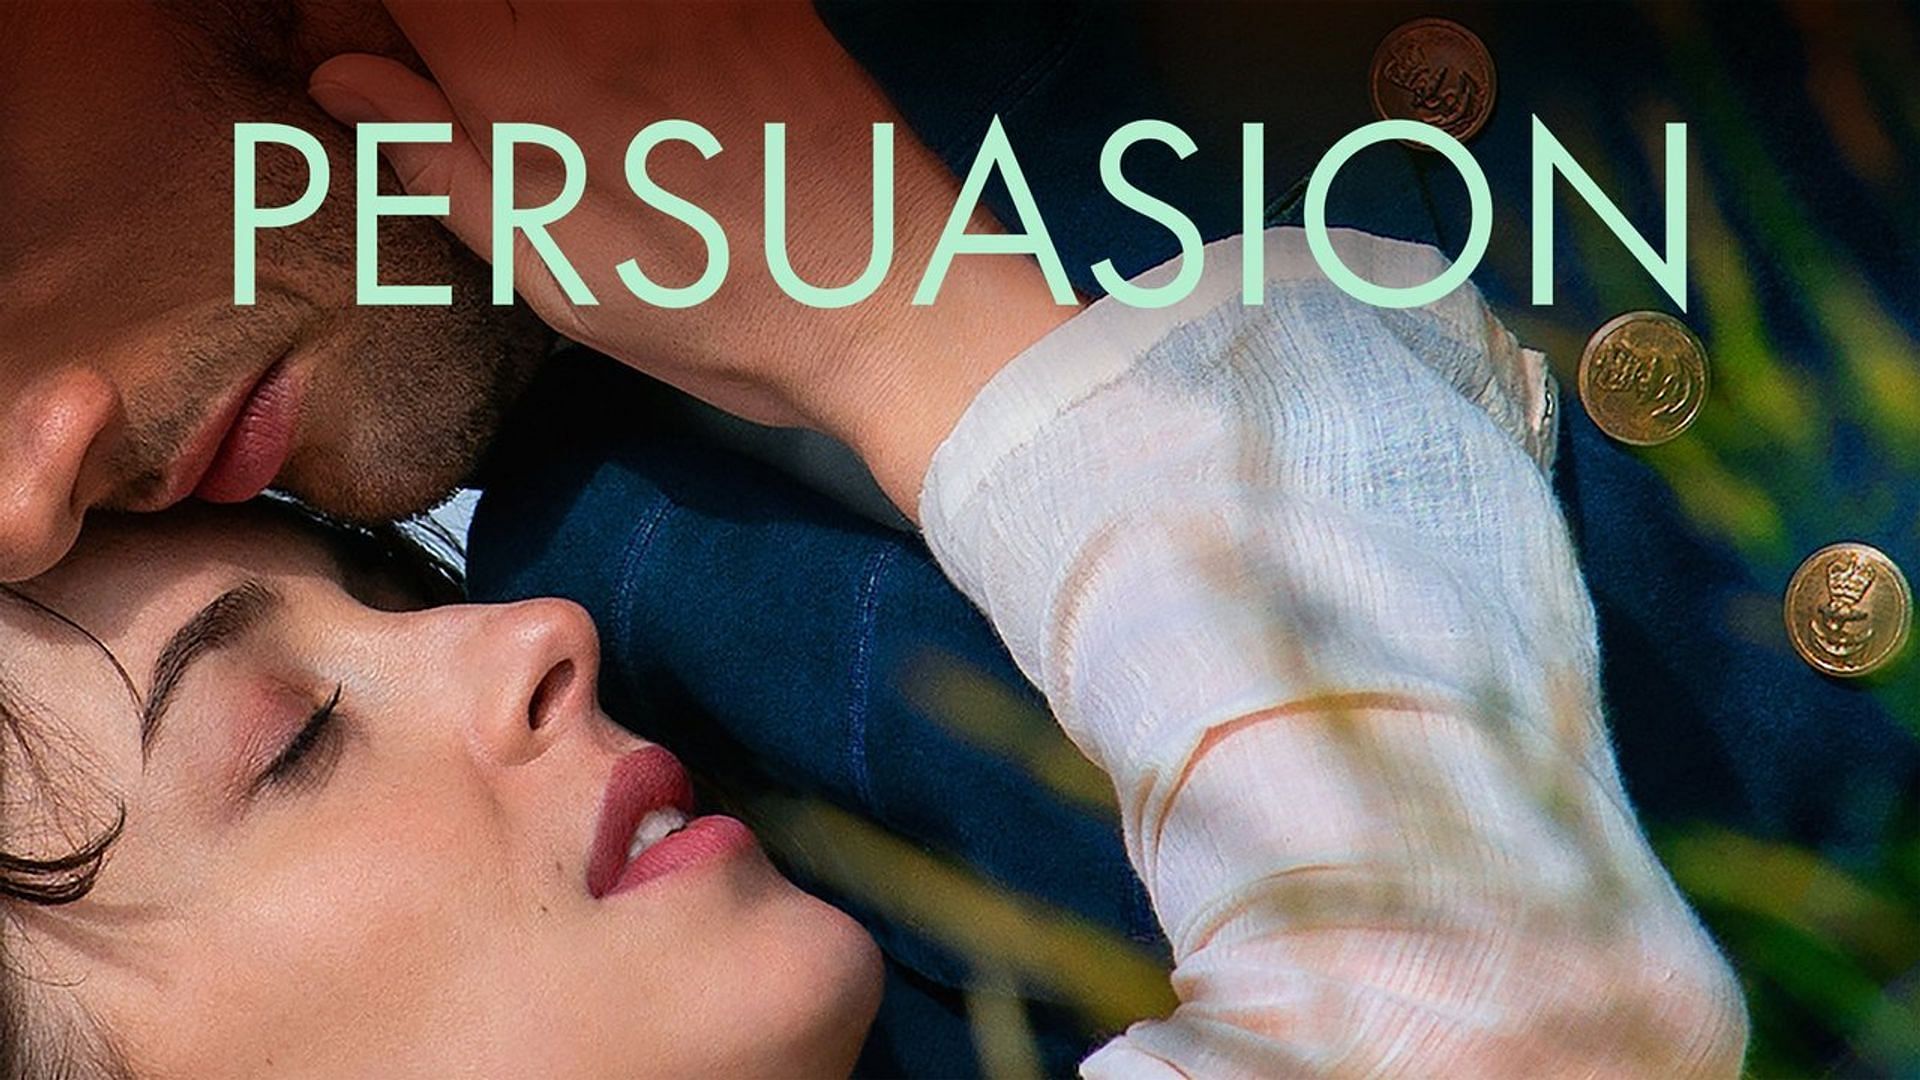 Persuasion (2022 film) - Wikipedia